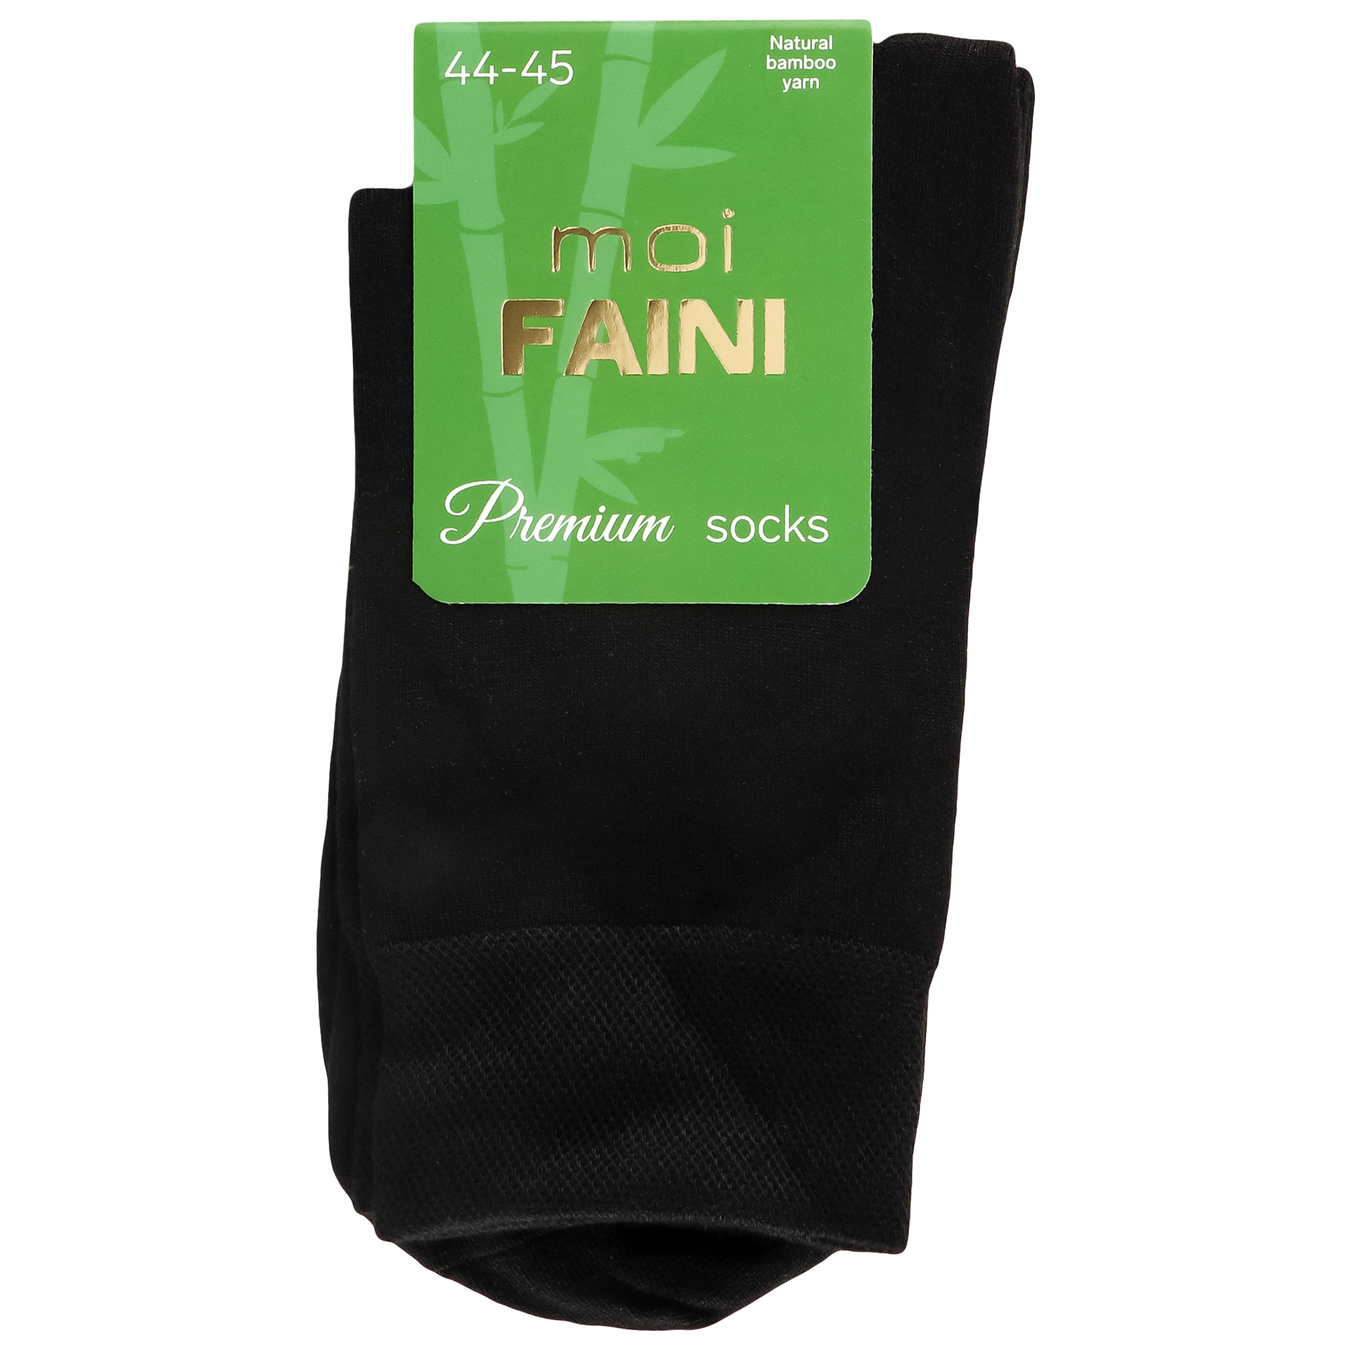 Men's socks moi FAINI bamboo classic black size 44-45 years.